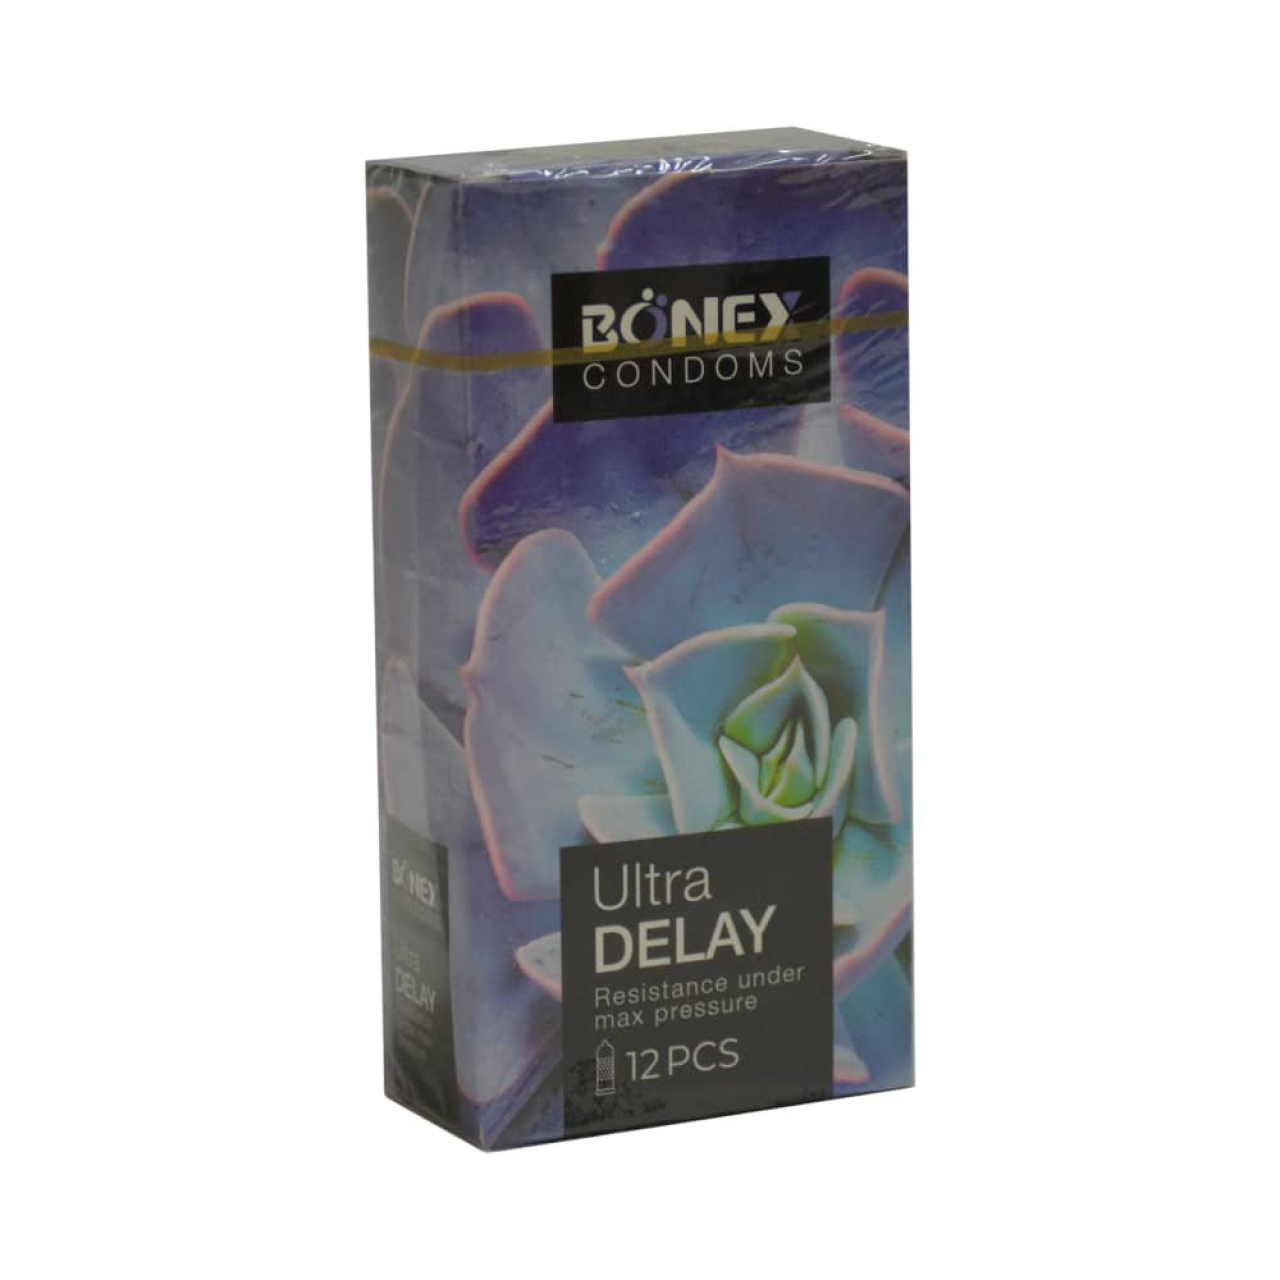 کاندوم بونکس مدل Ultra DELAY کد 001 بسته 12 عددی